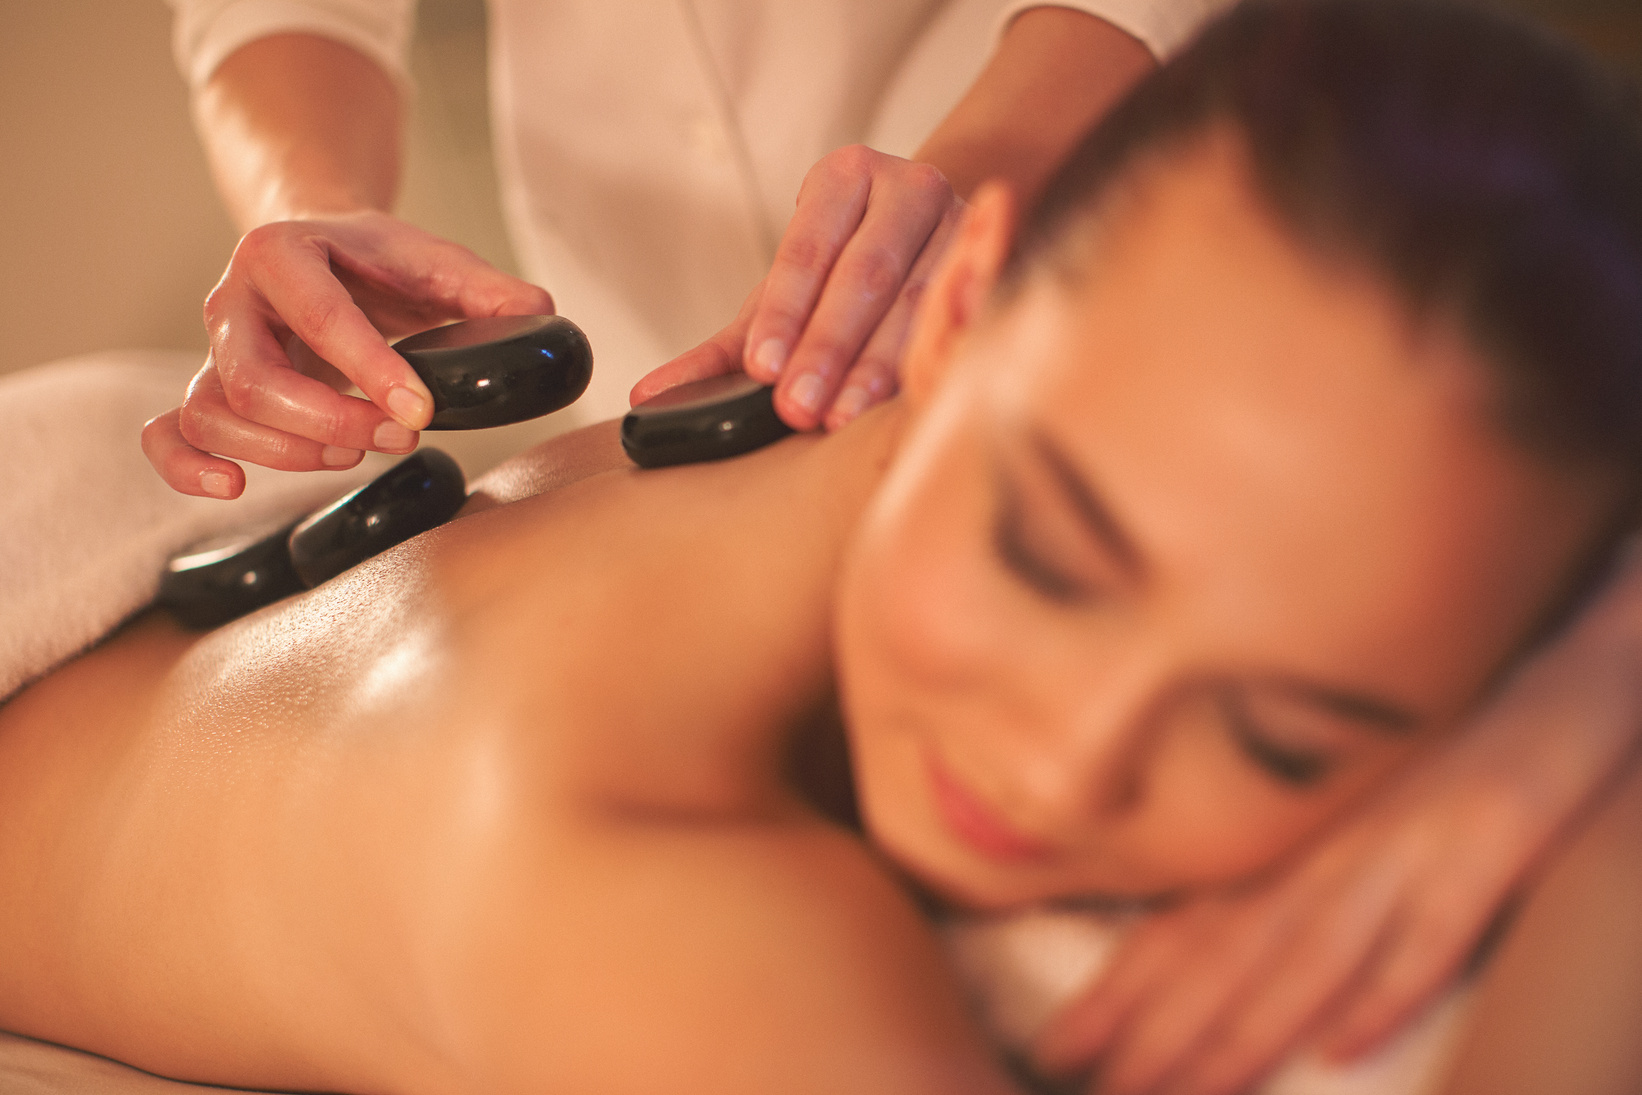 Massage therapyst using lava stones for massage